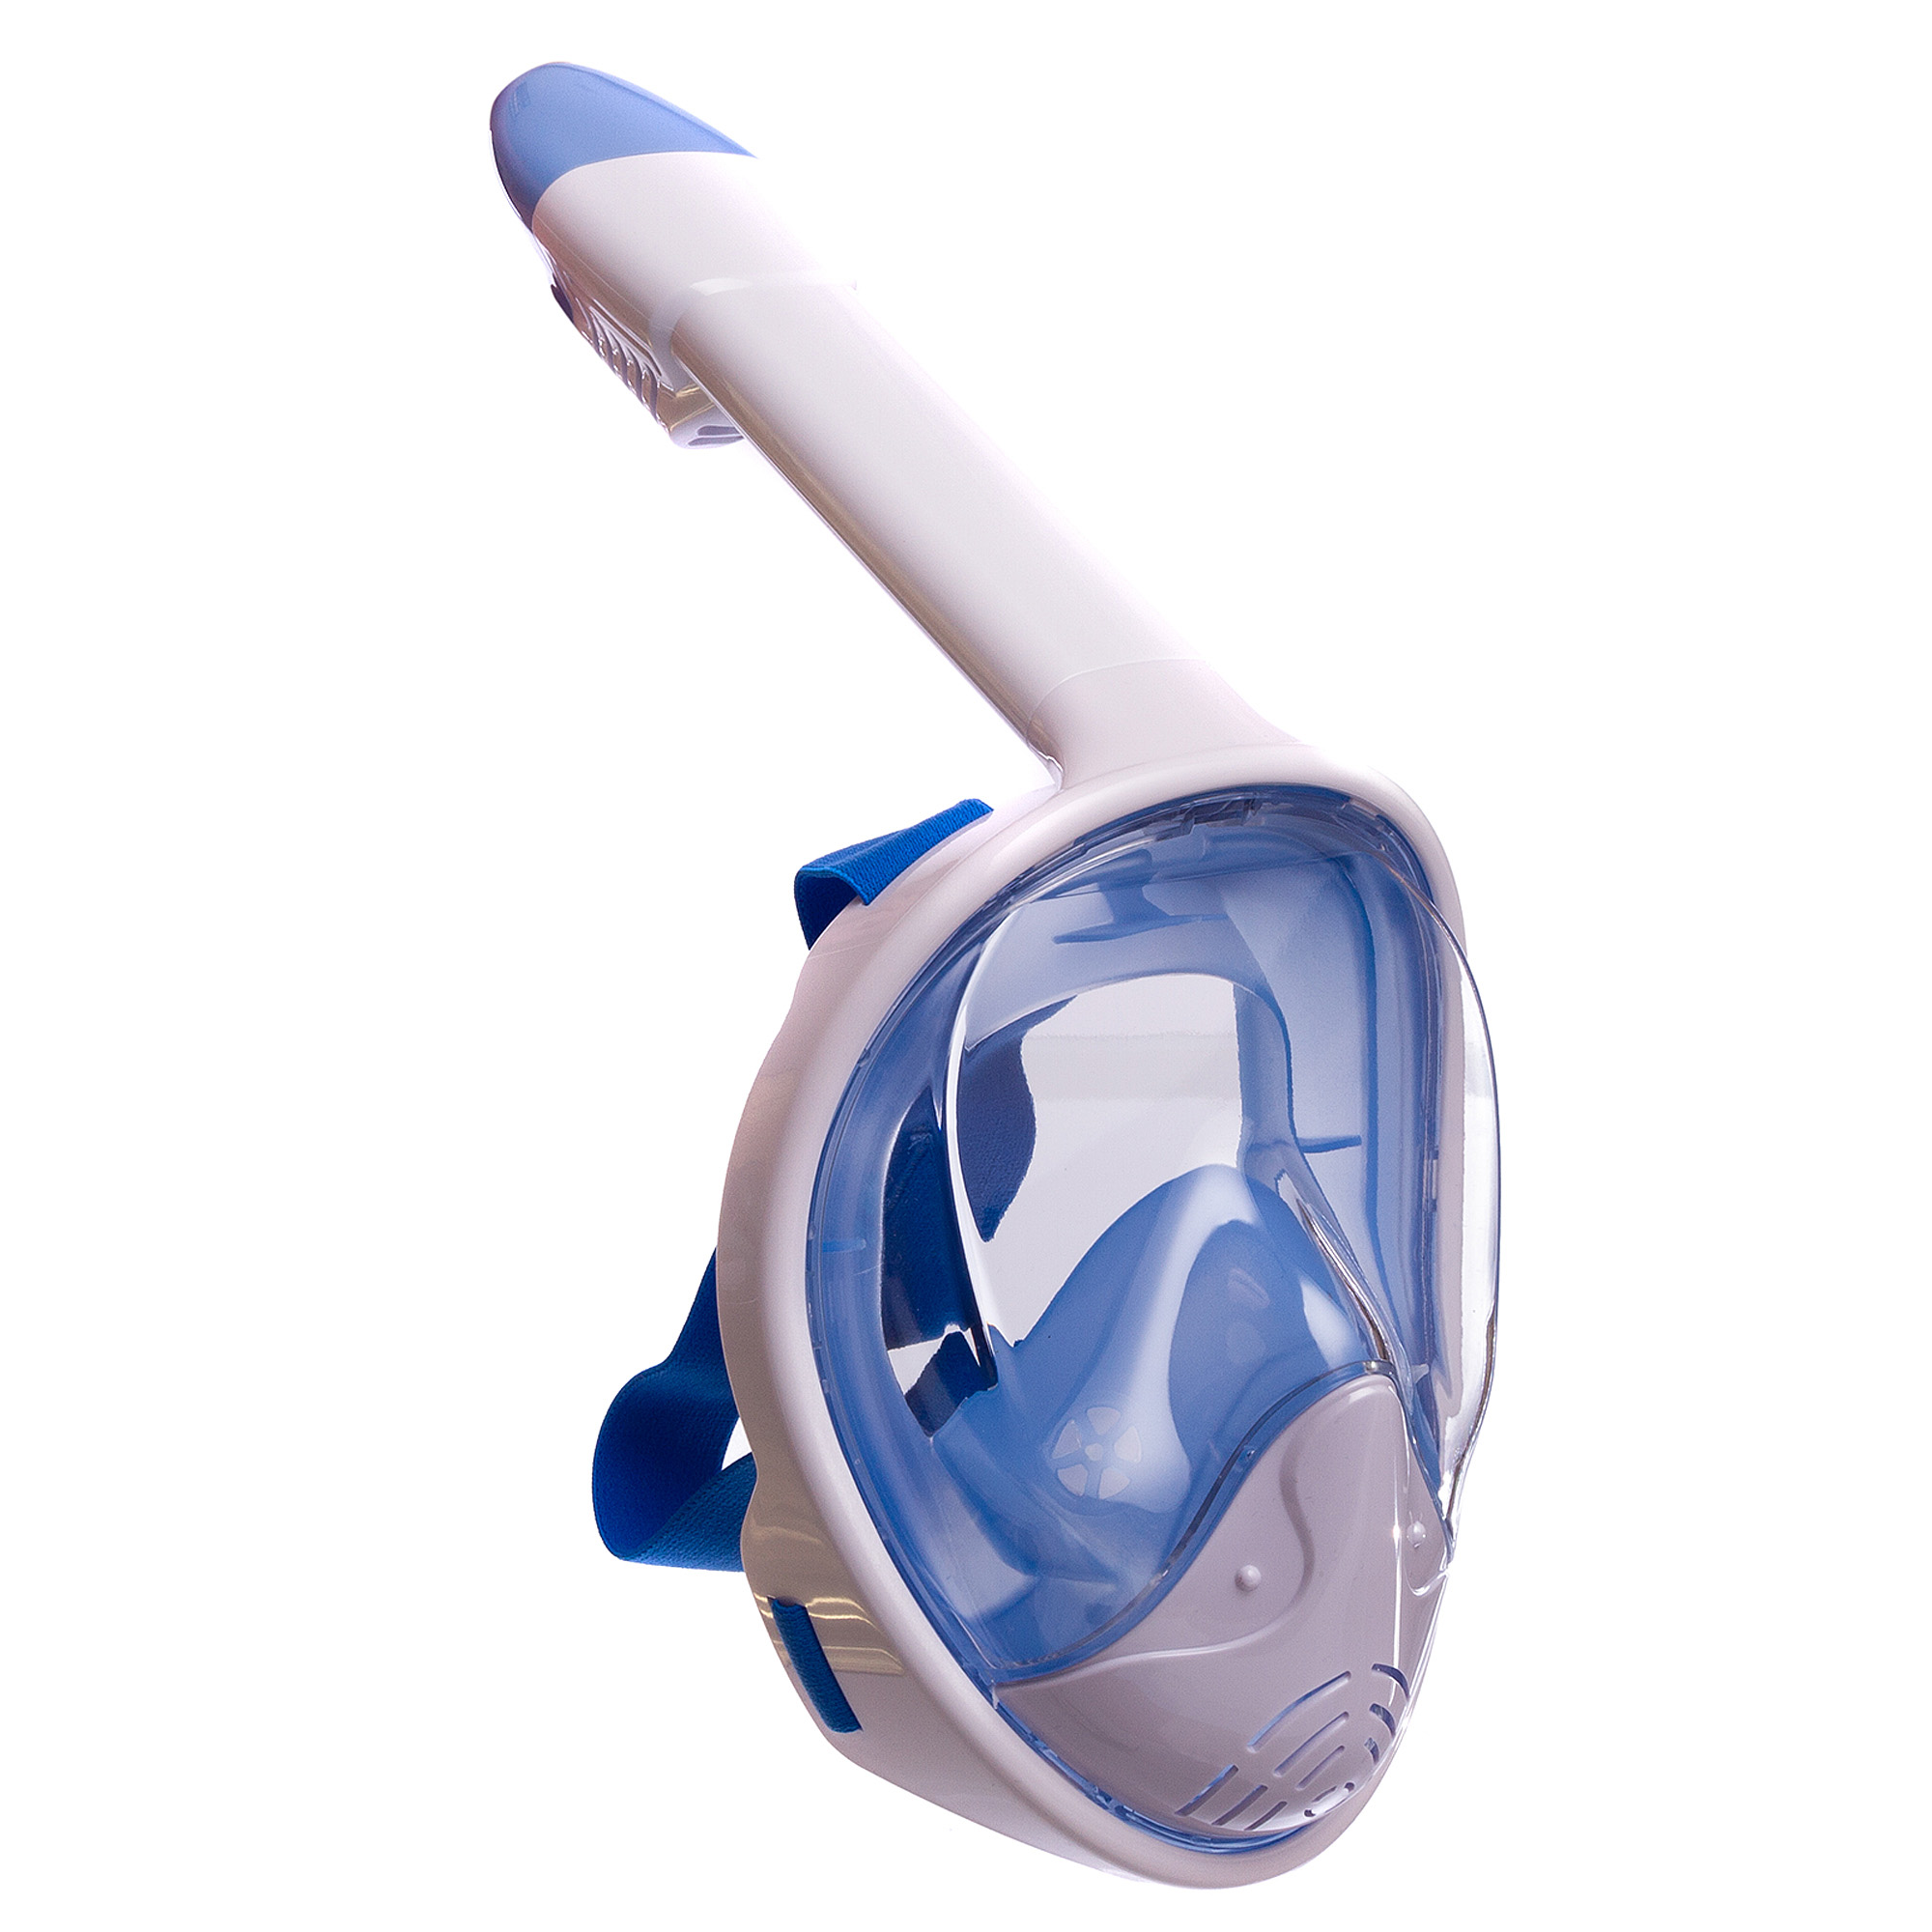 Маска для снорклинга с дыханием через нос YSE (силикон, пластик, р-р L-XL) Белый-синий (PT0850)